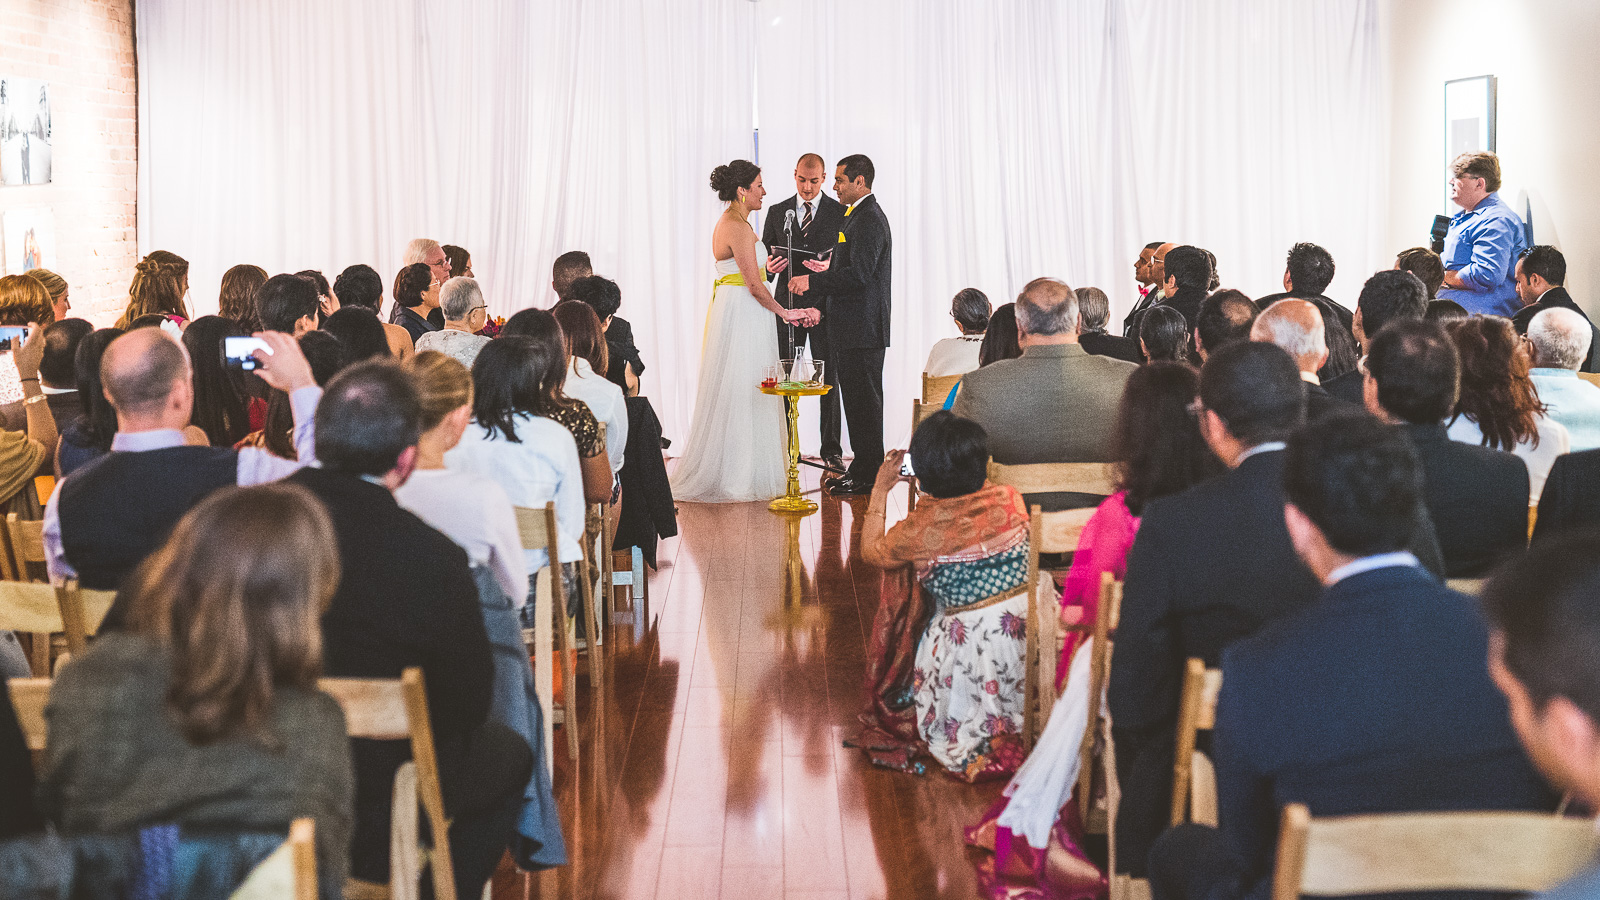 32 ceremony photos at chicago wedding - Jackie + Raj // Chicago Wedding Photography at Floating World Gallery